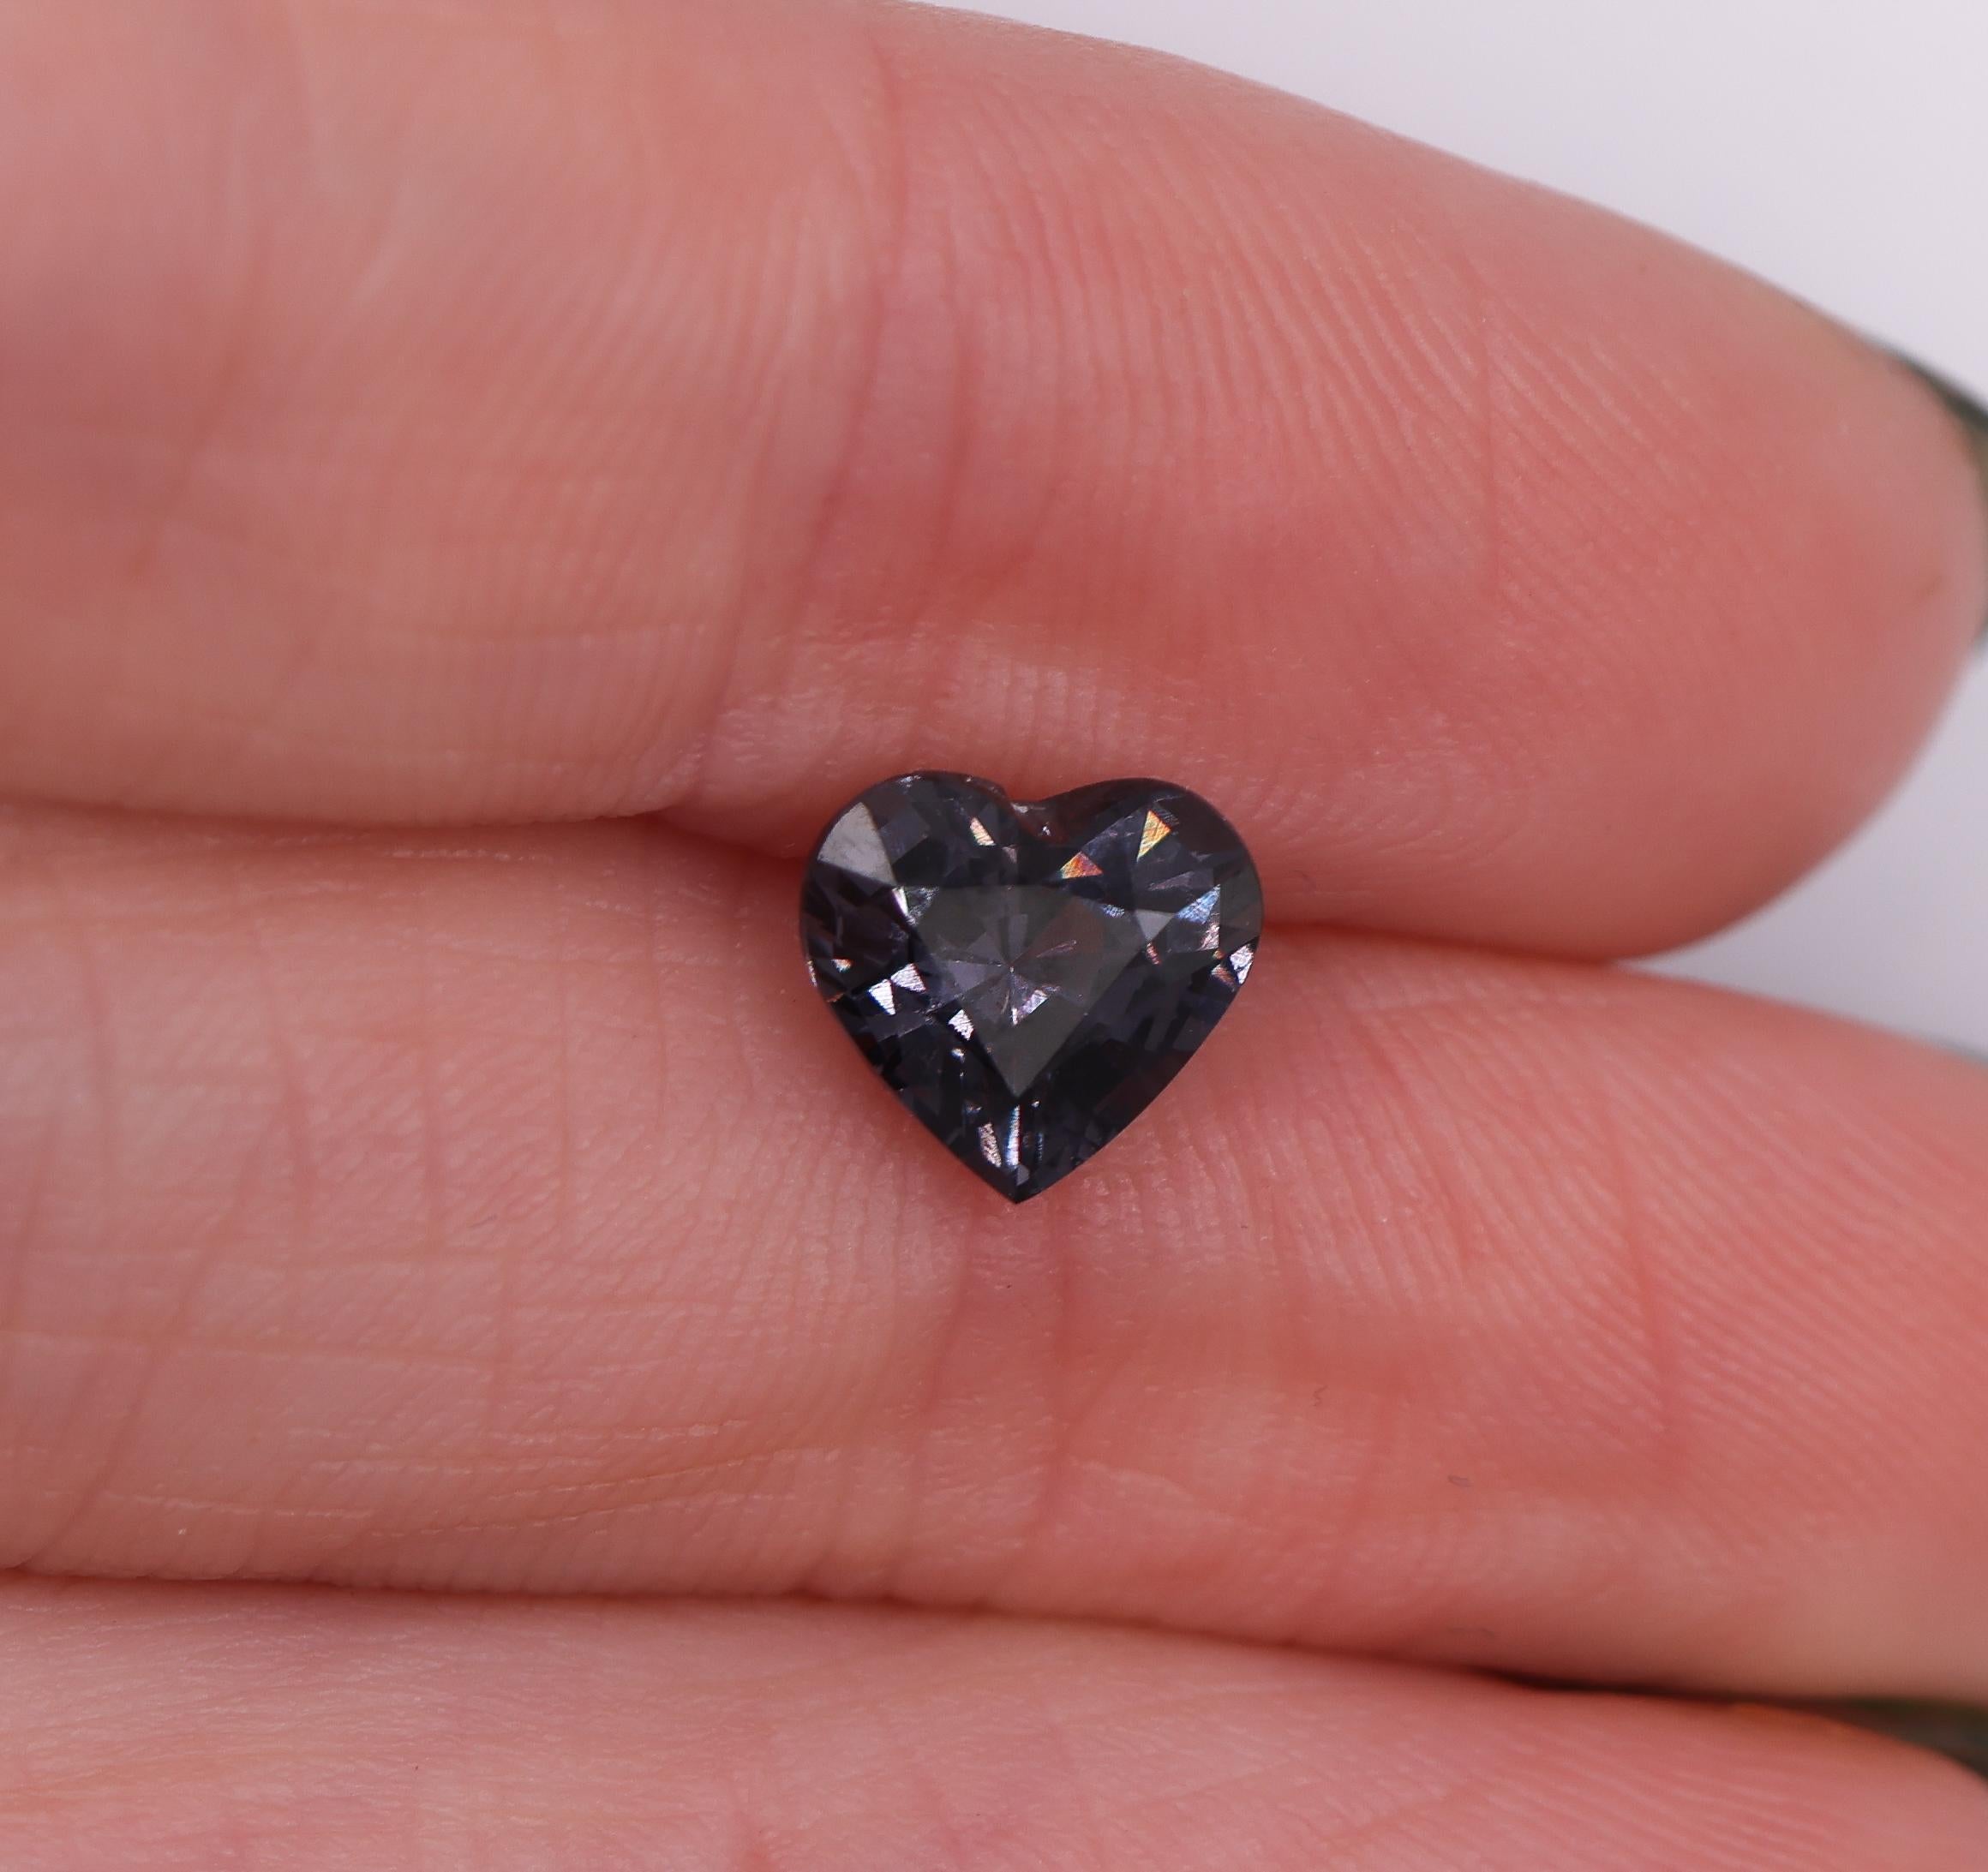 Heart Cut 1.59 Carat Grey Spinel Gemstone  Heart Shape 8 x 7mm  Loose Gemstone For Sale